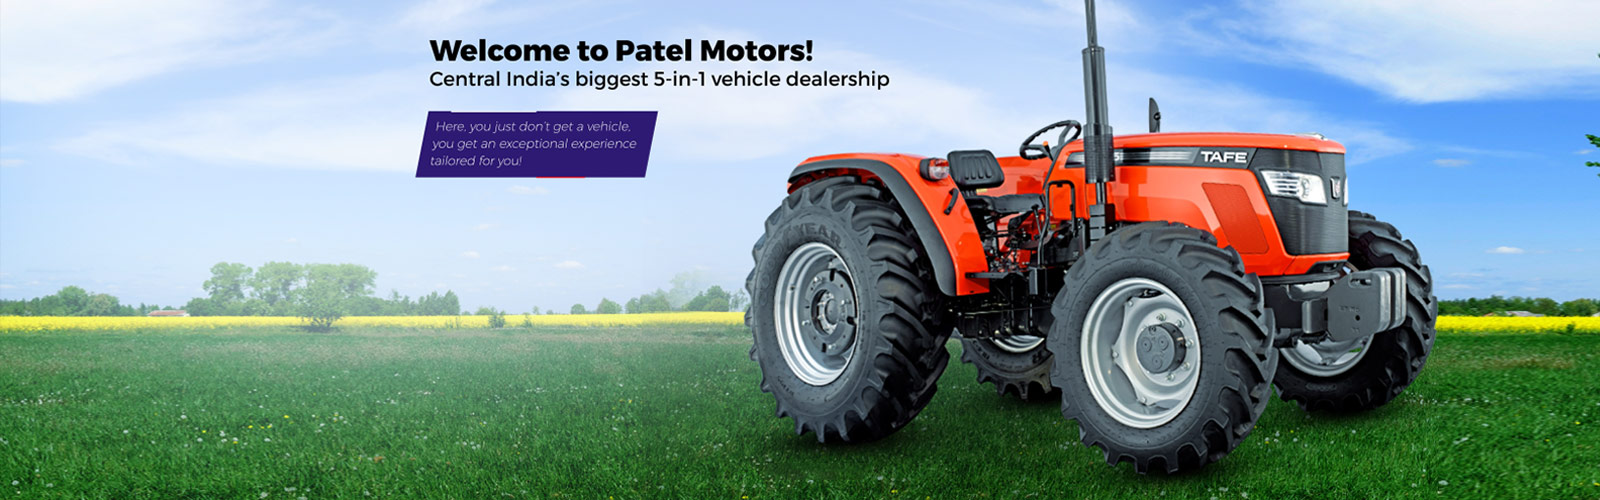 Patel Motors Tafe